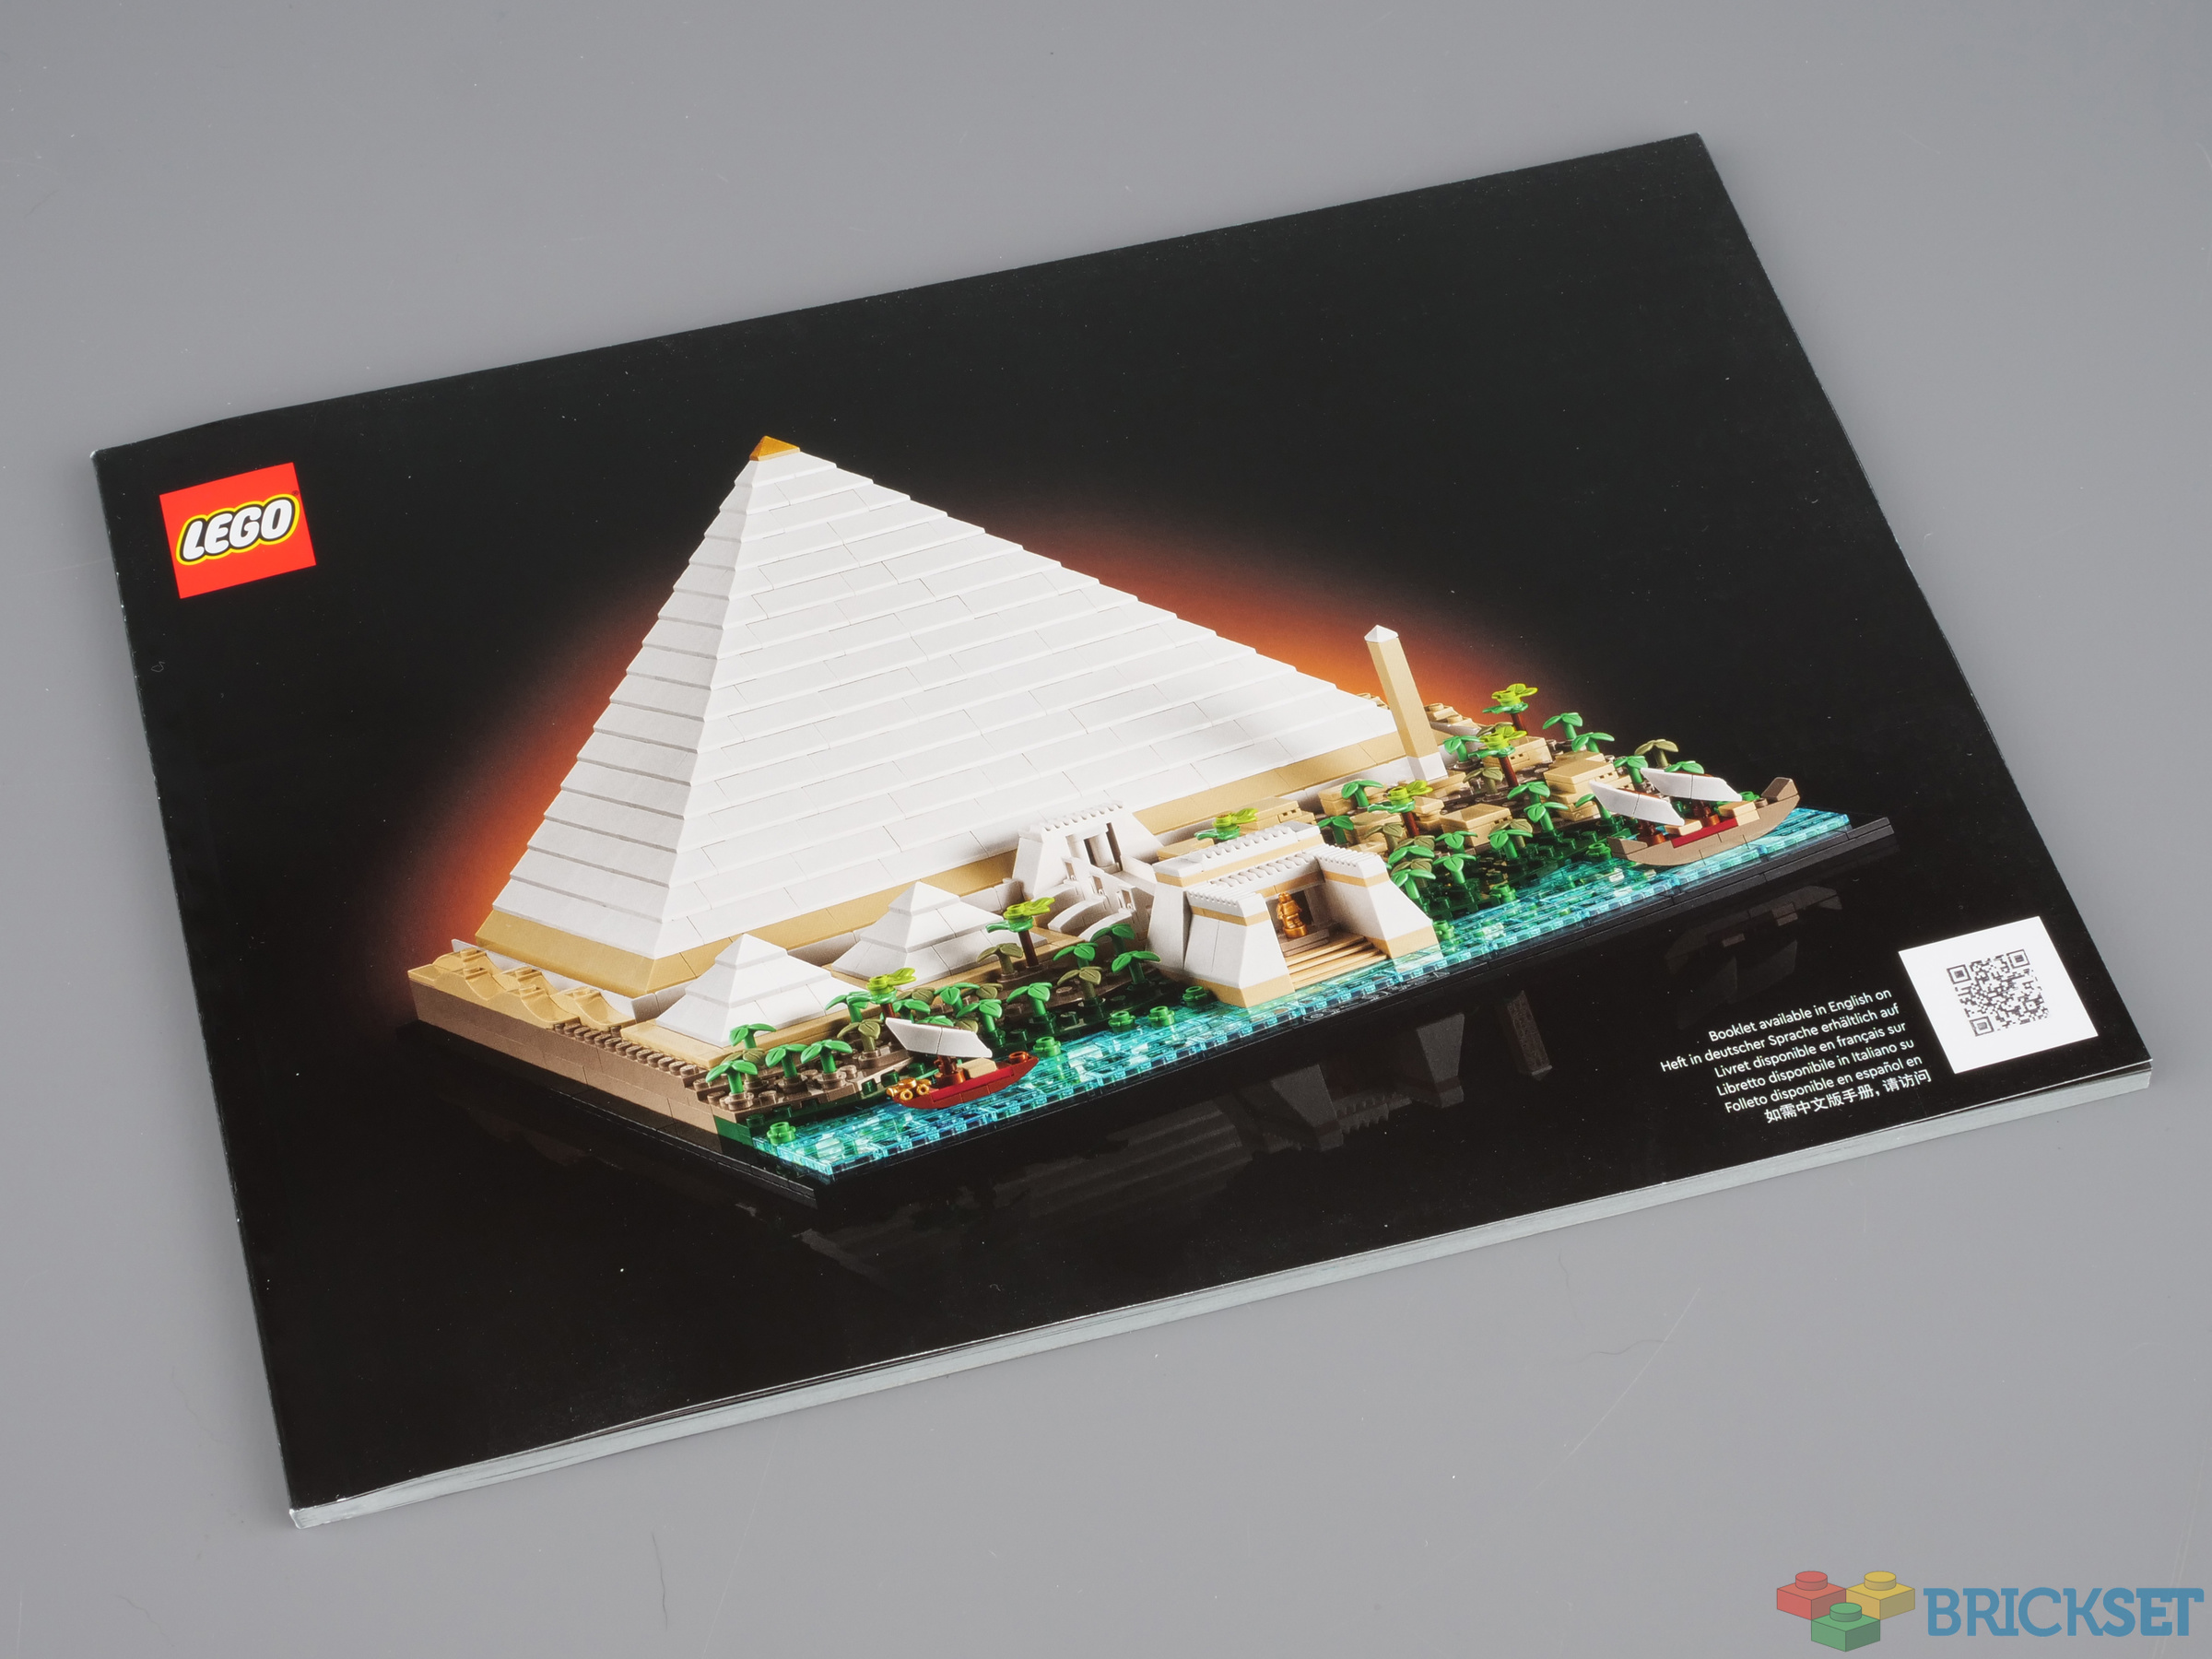 | of Giza 21058 Pyramid Great review Brickset LEGO The